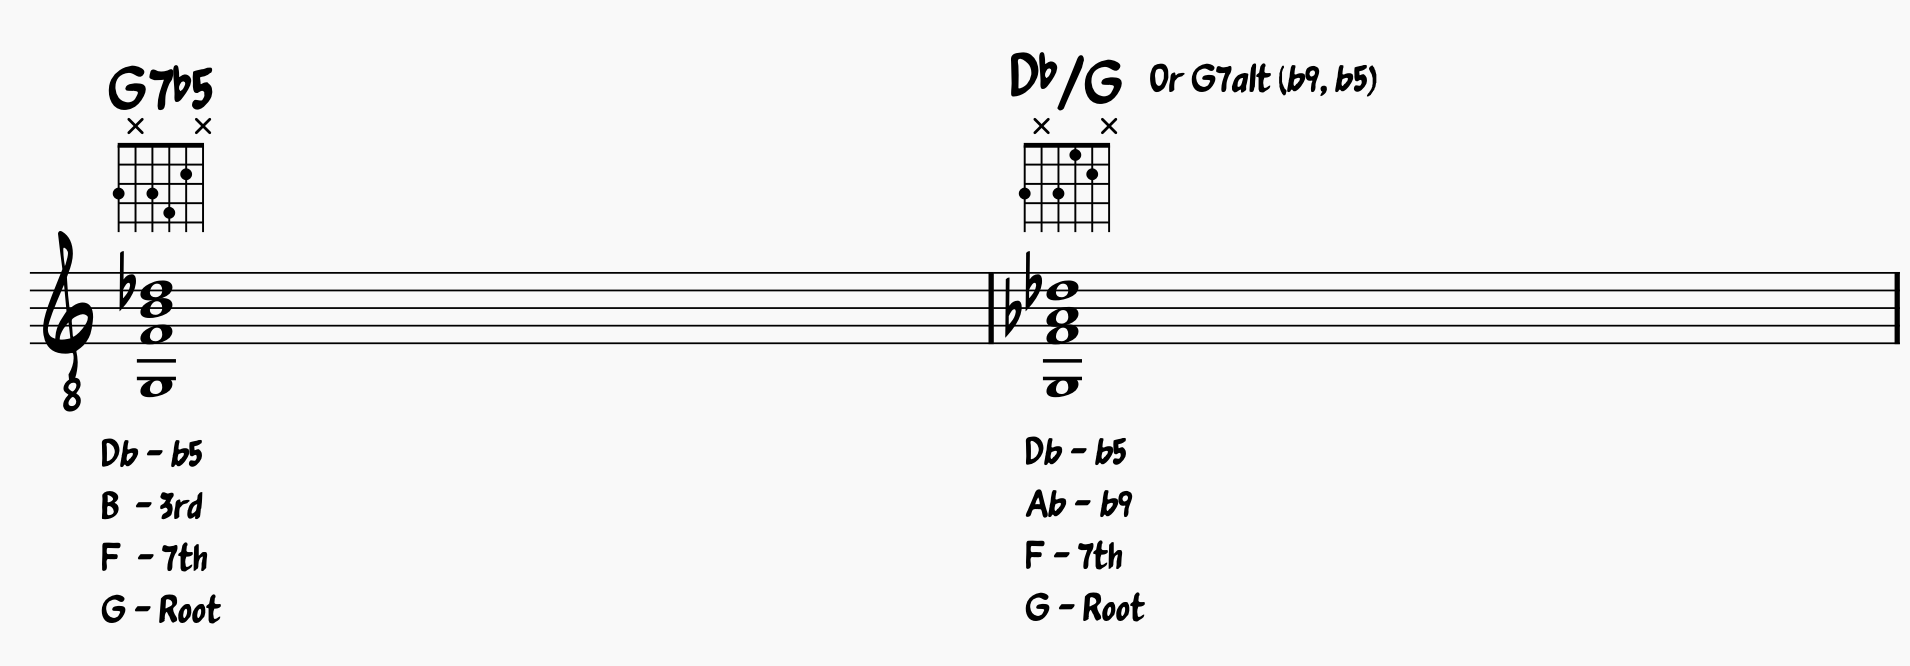 G7b5 stock voicing verses Db/G slash chord